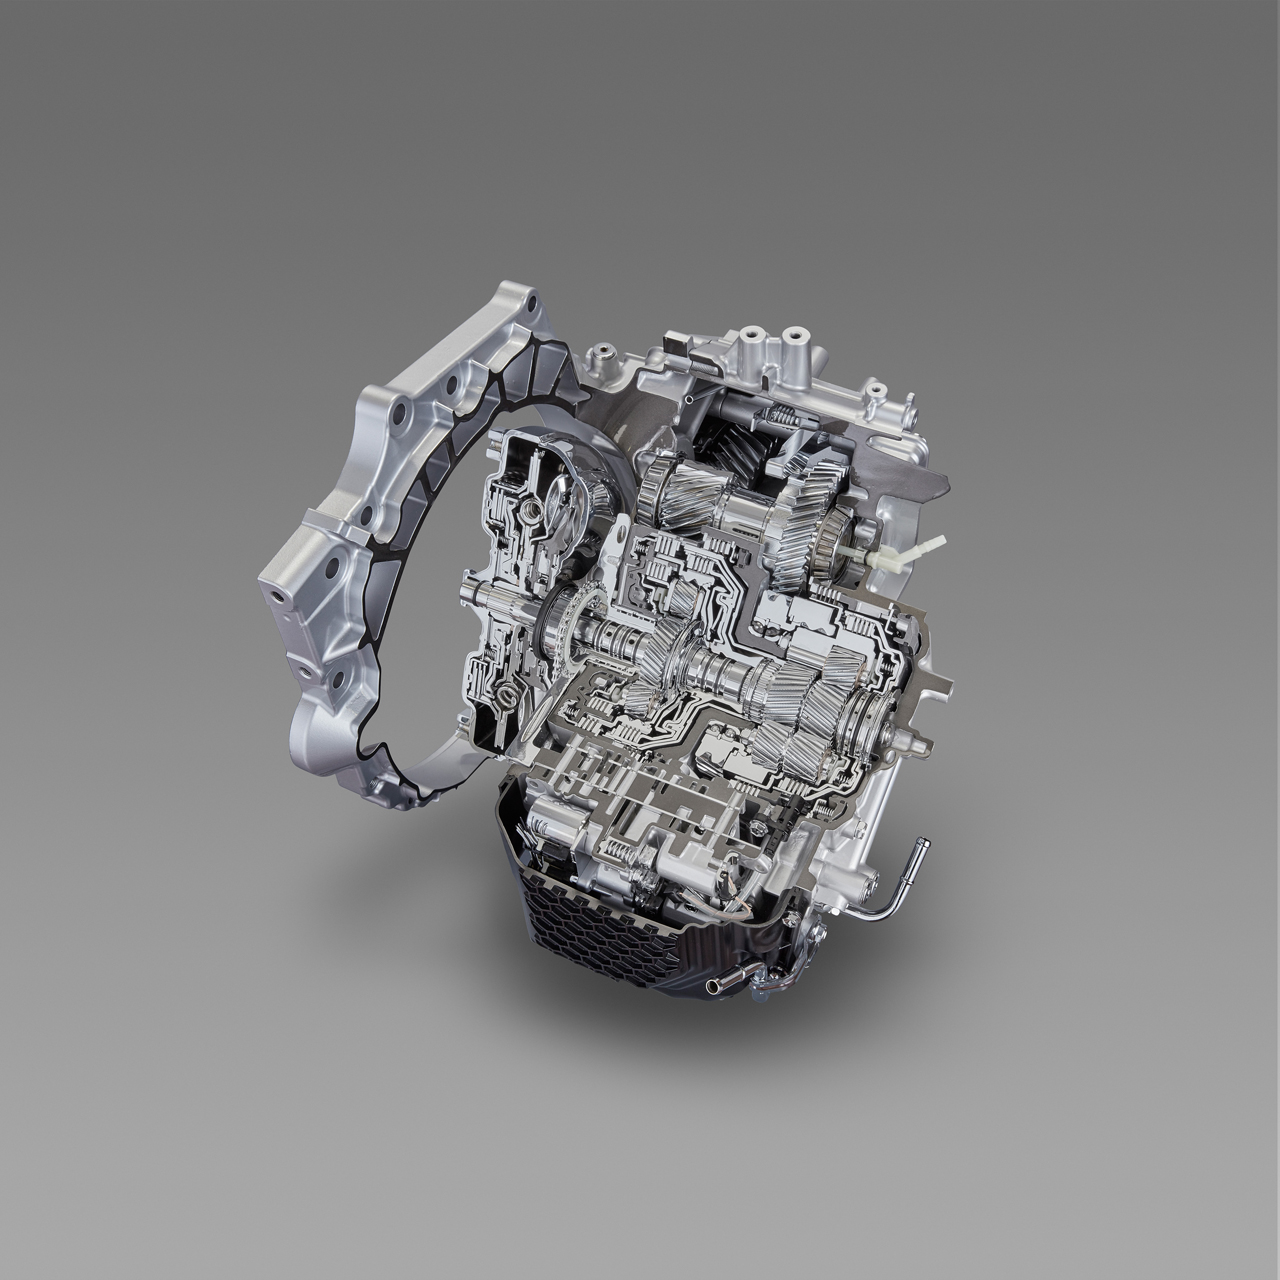 Toyota_New_Engines (3)